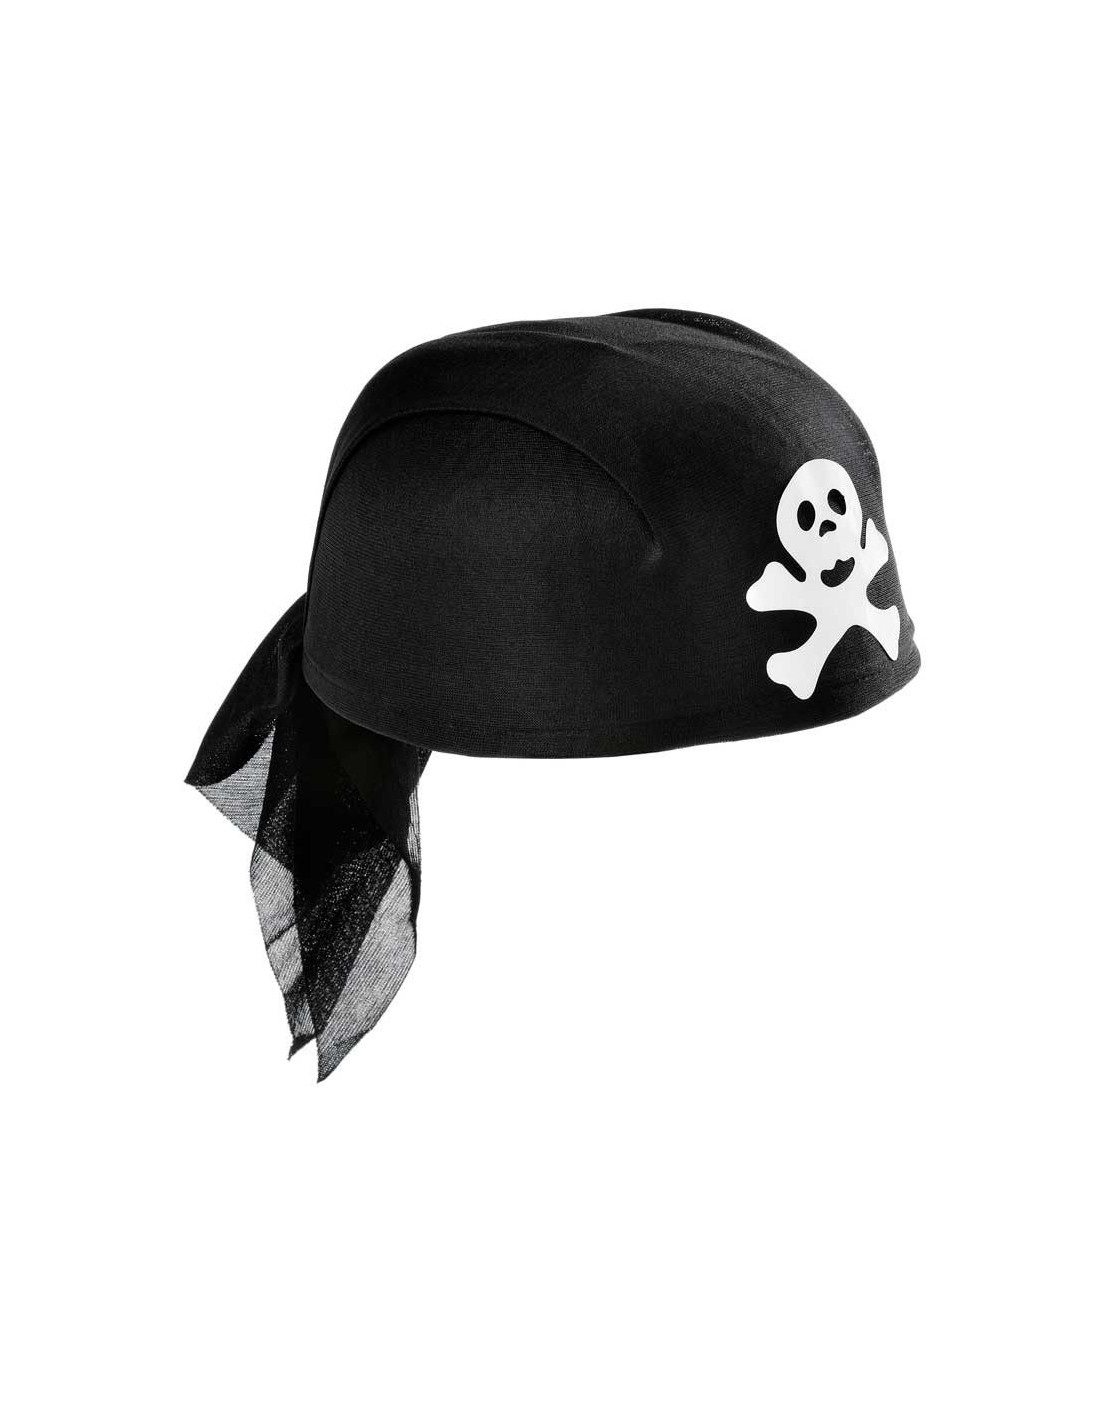 Casquete pirata con pañuelo Comprar en Tienda Disfraces Bacanal